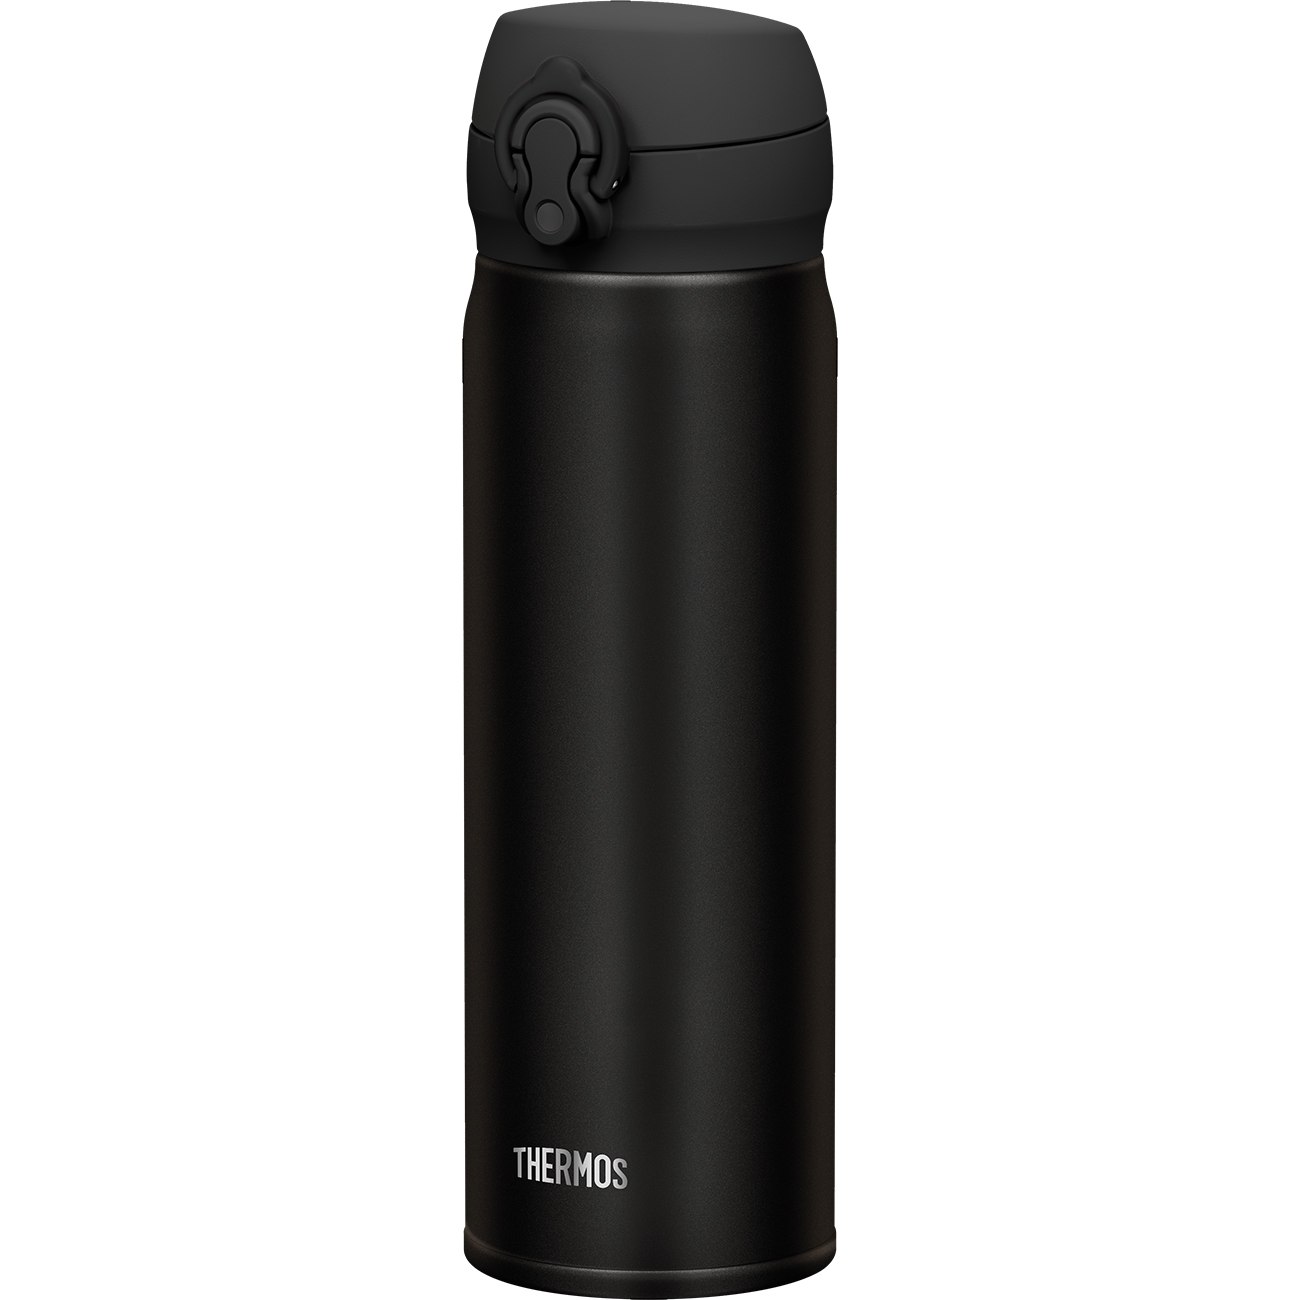 Productfoto van THERMOS® Beverage Bottle Ultralight 0.5L - mat black